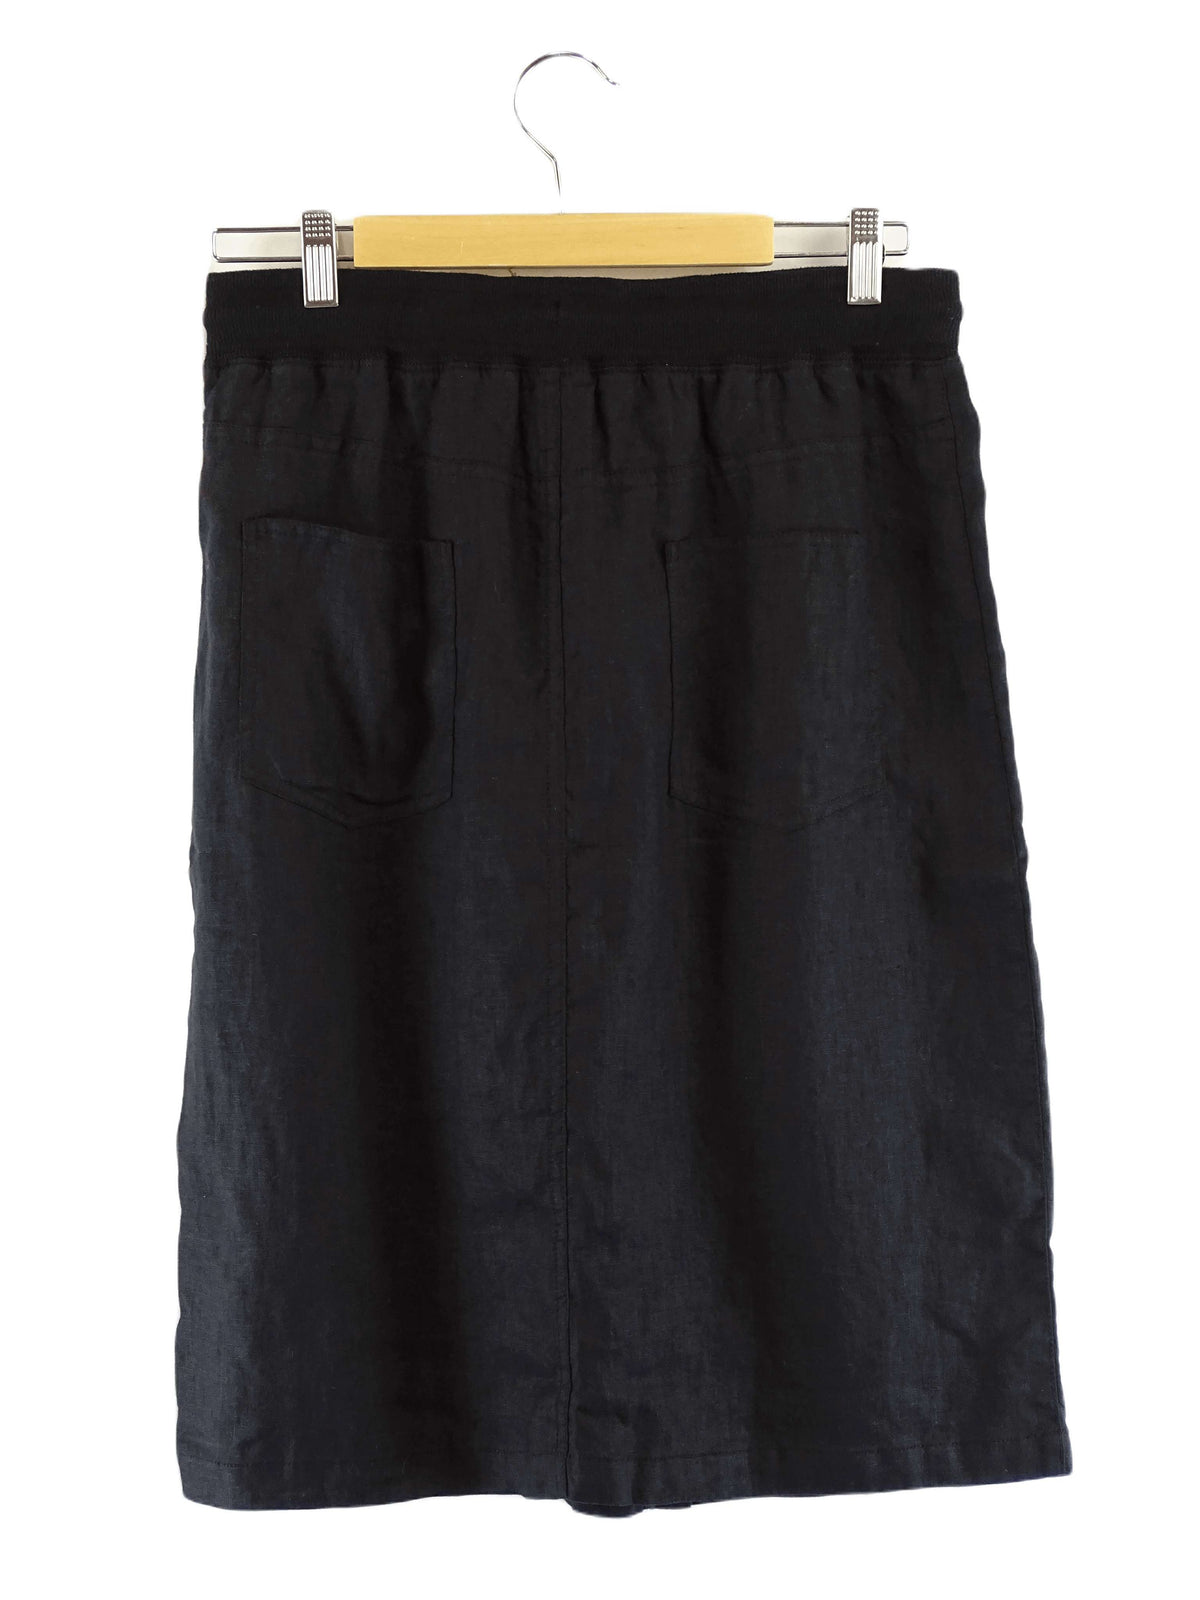 David Jones Black Linen Skirt 8